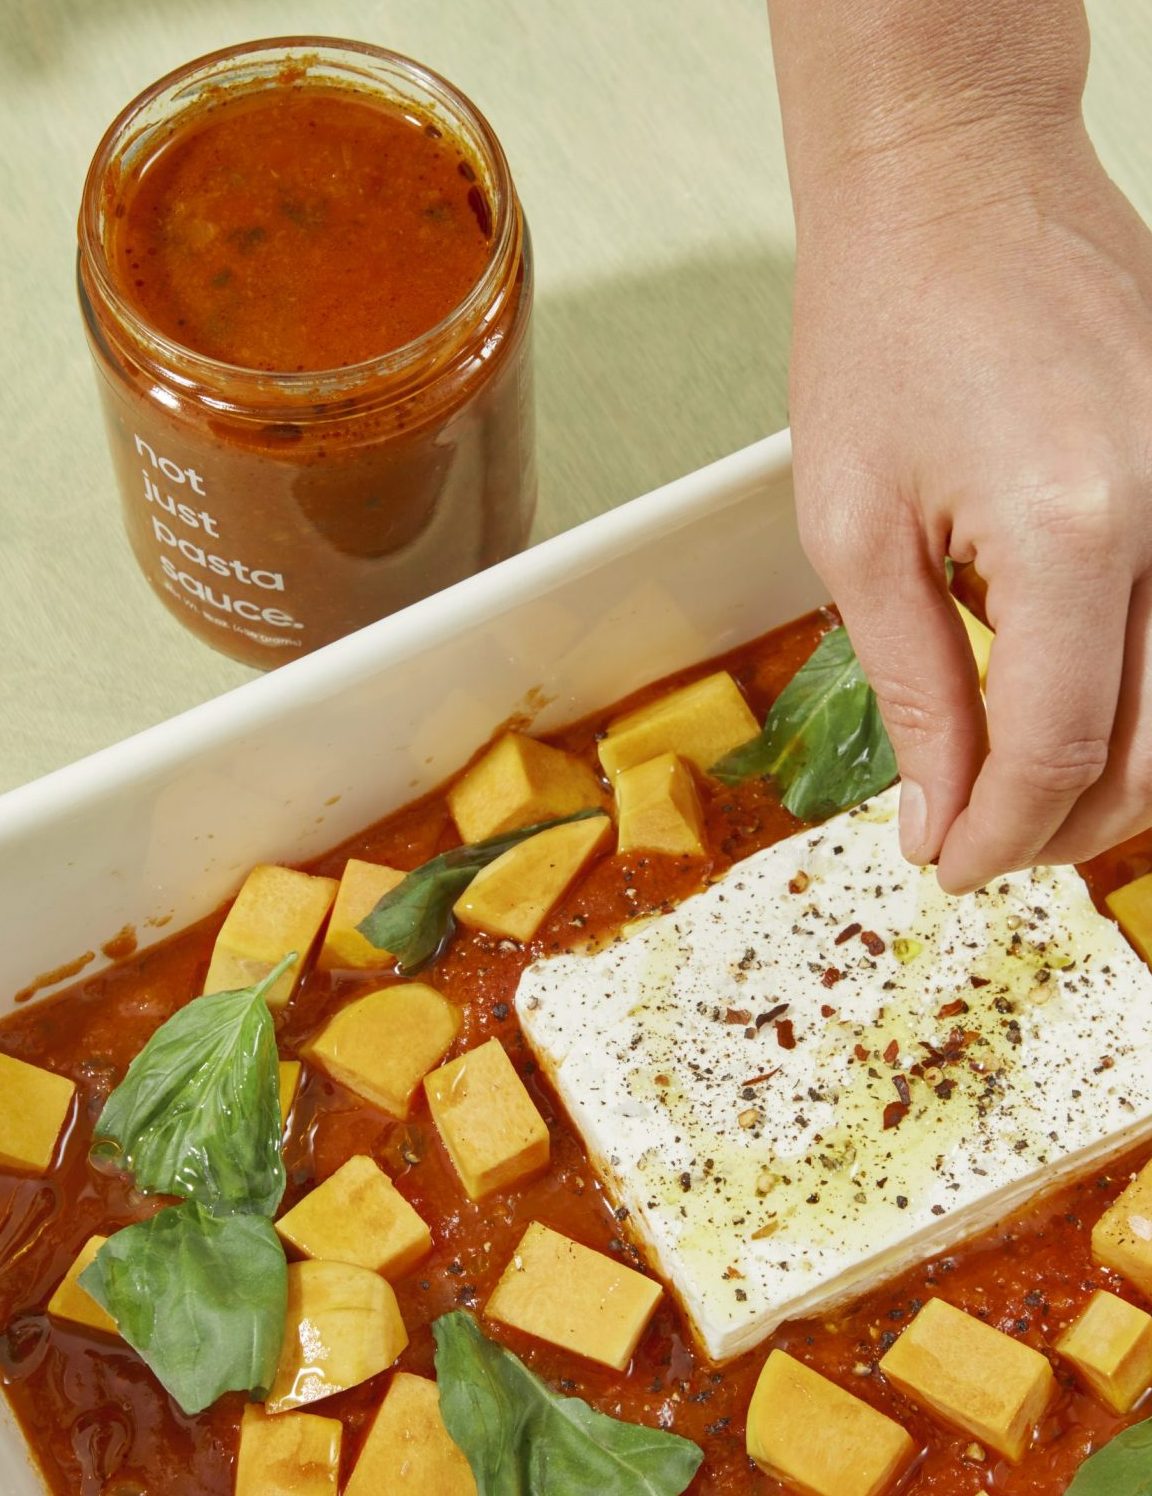 making the baked feta pasta that went viral on tiktok